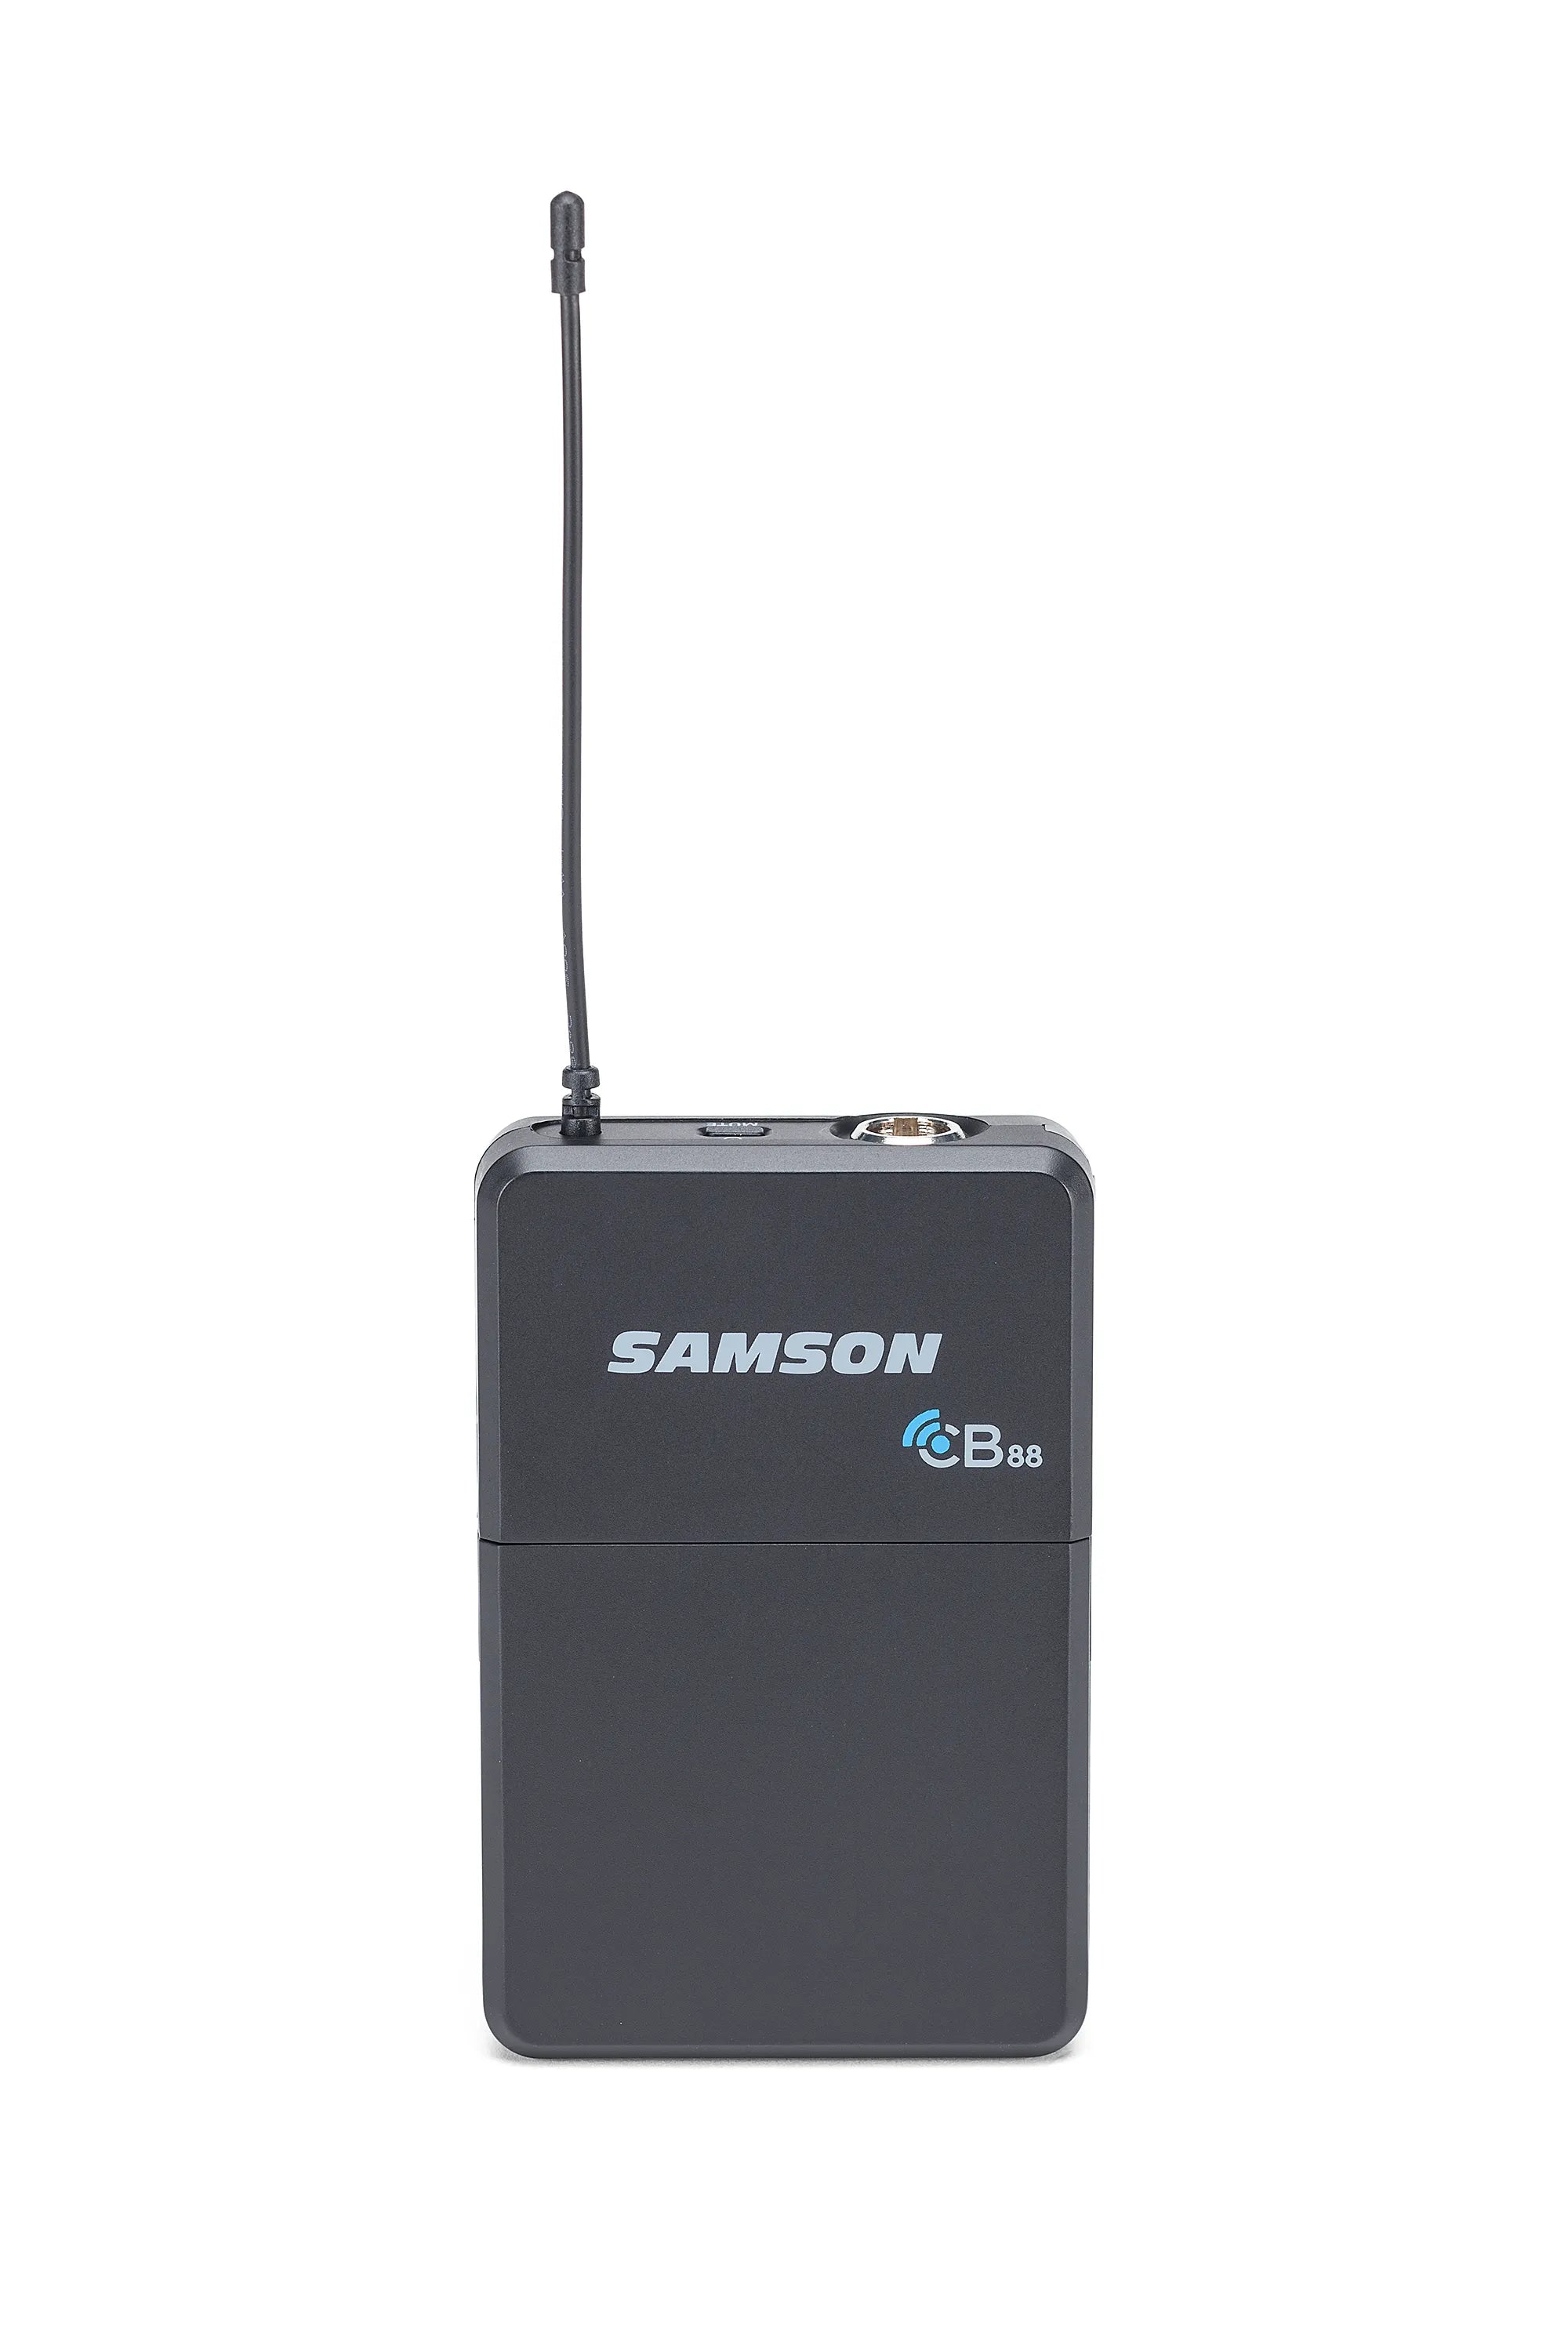 Samson Concert 88x Wireless LM5 Lavalier Microphone System K(470 TO 494 MHZ)